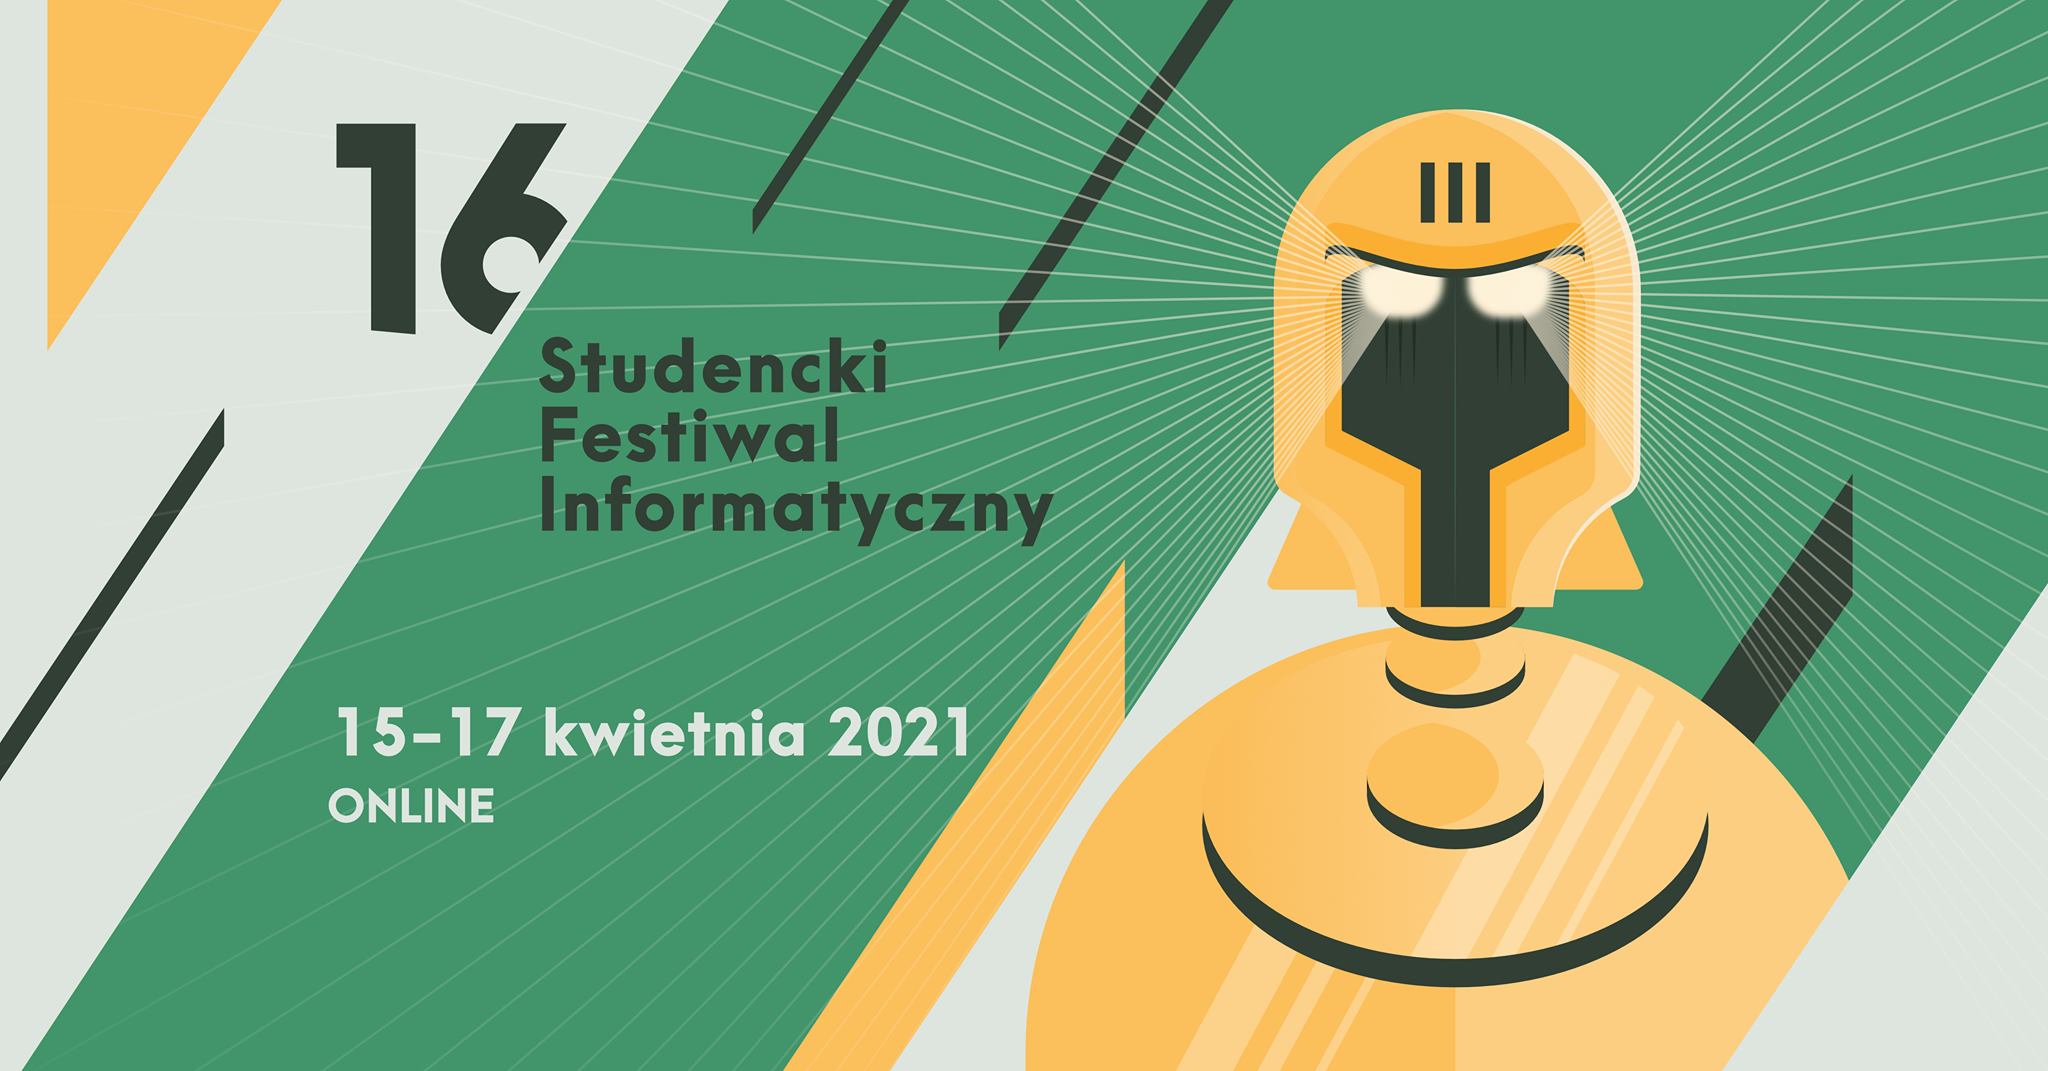 16-studencki-festiwal-informatyczny